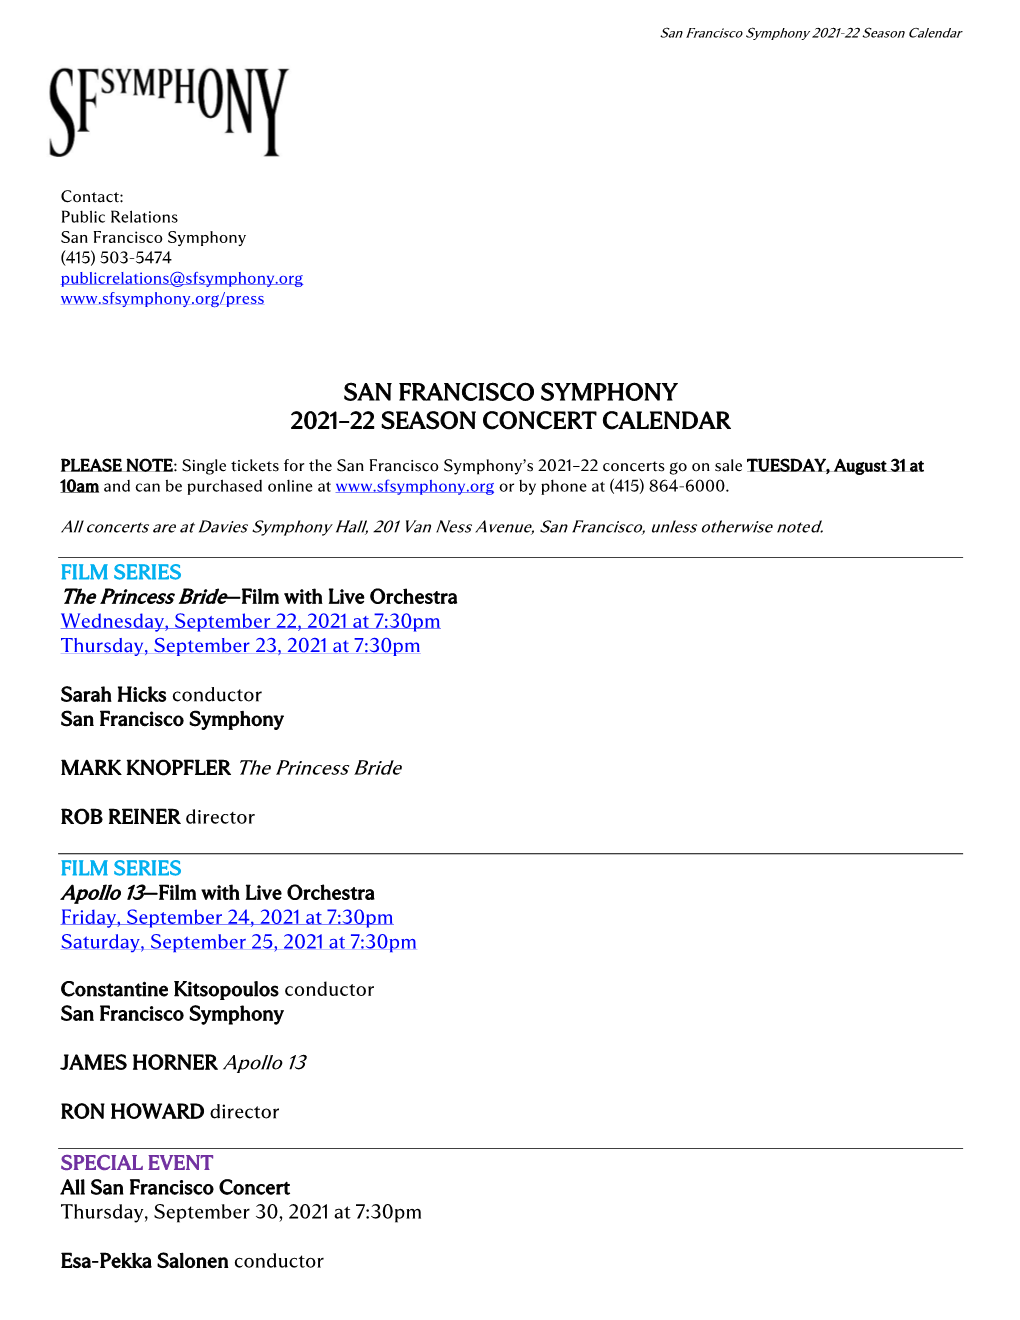 San Francisco Symphony 202122 Season Concert Calendar DocsLib